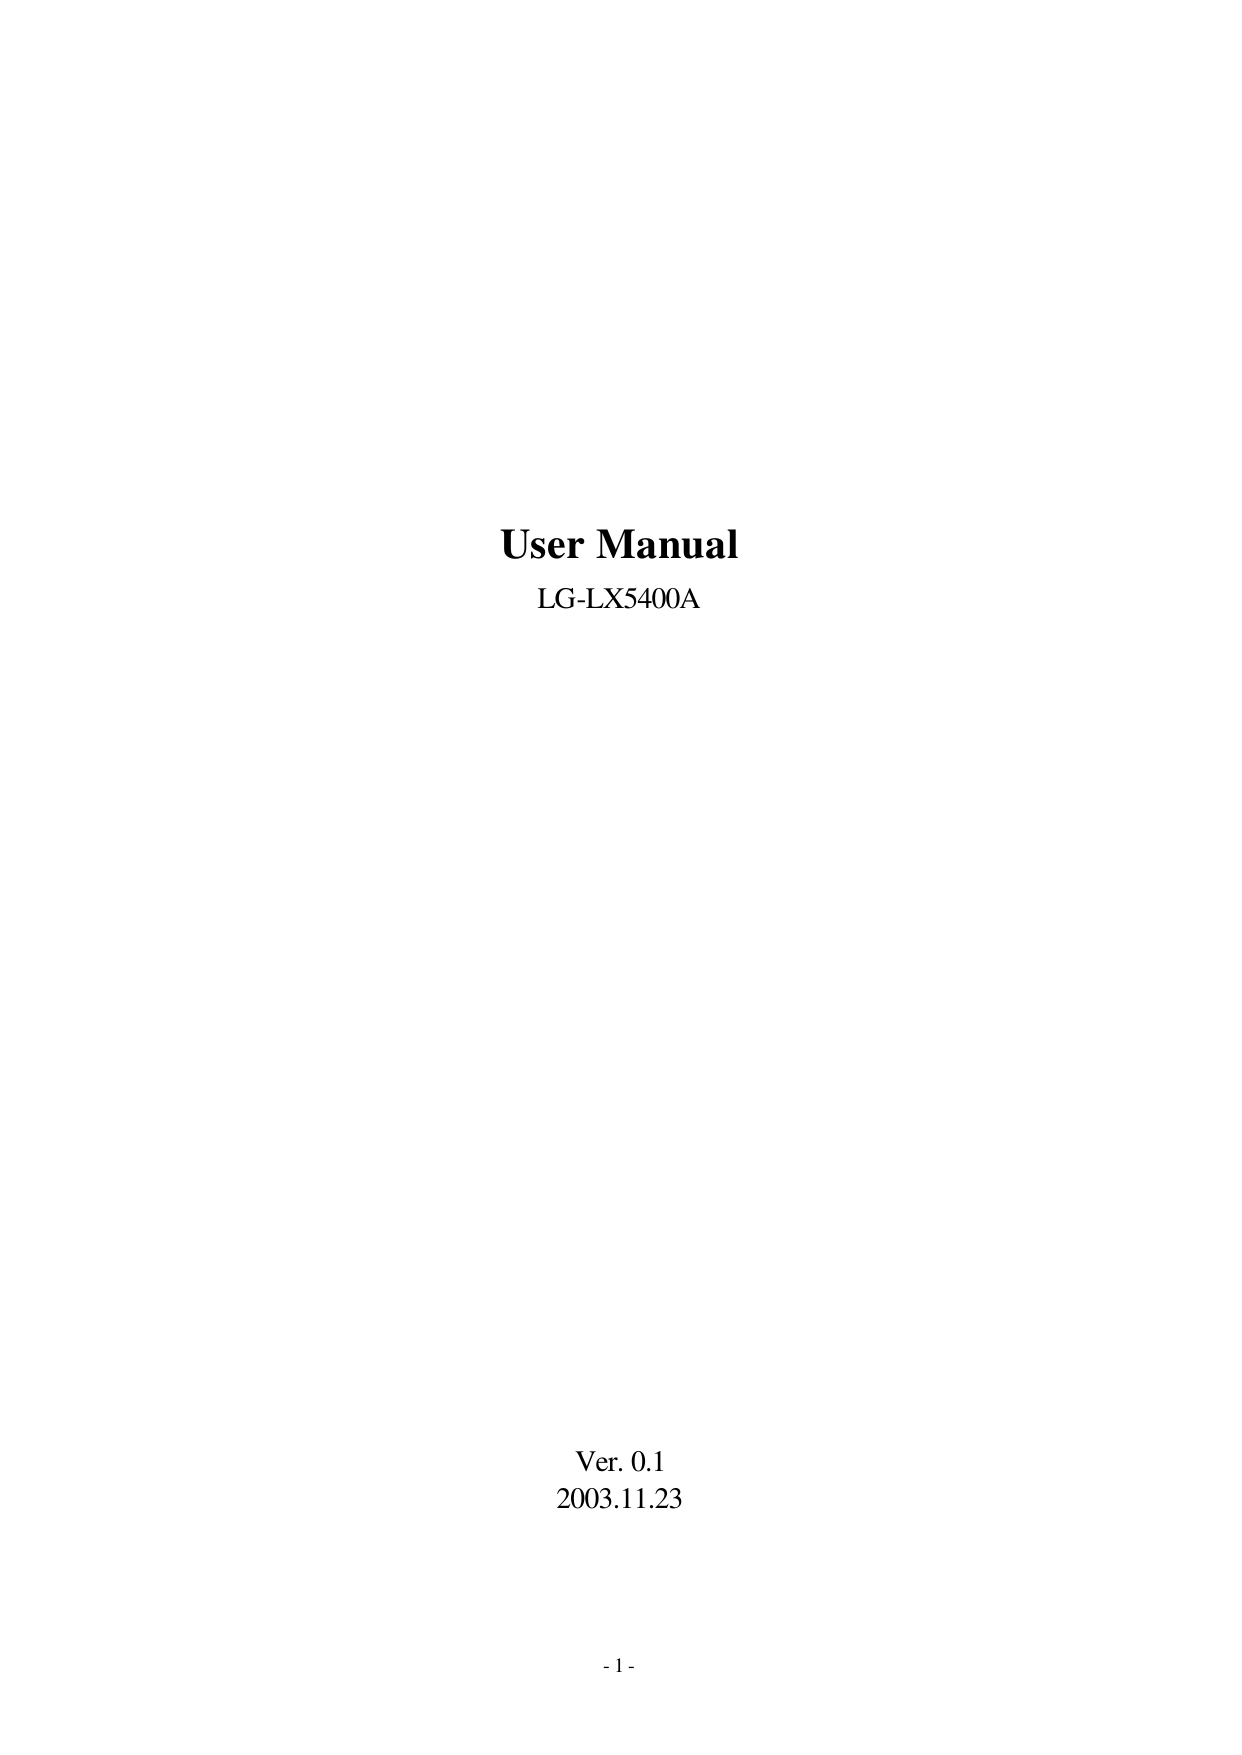 - 1 -     User Manual LG-LX5400A                       Ver. 0.1 2003.11.23 